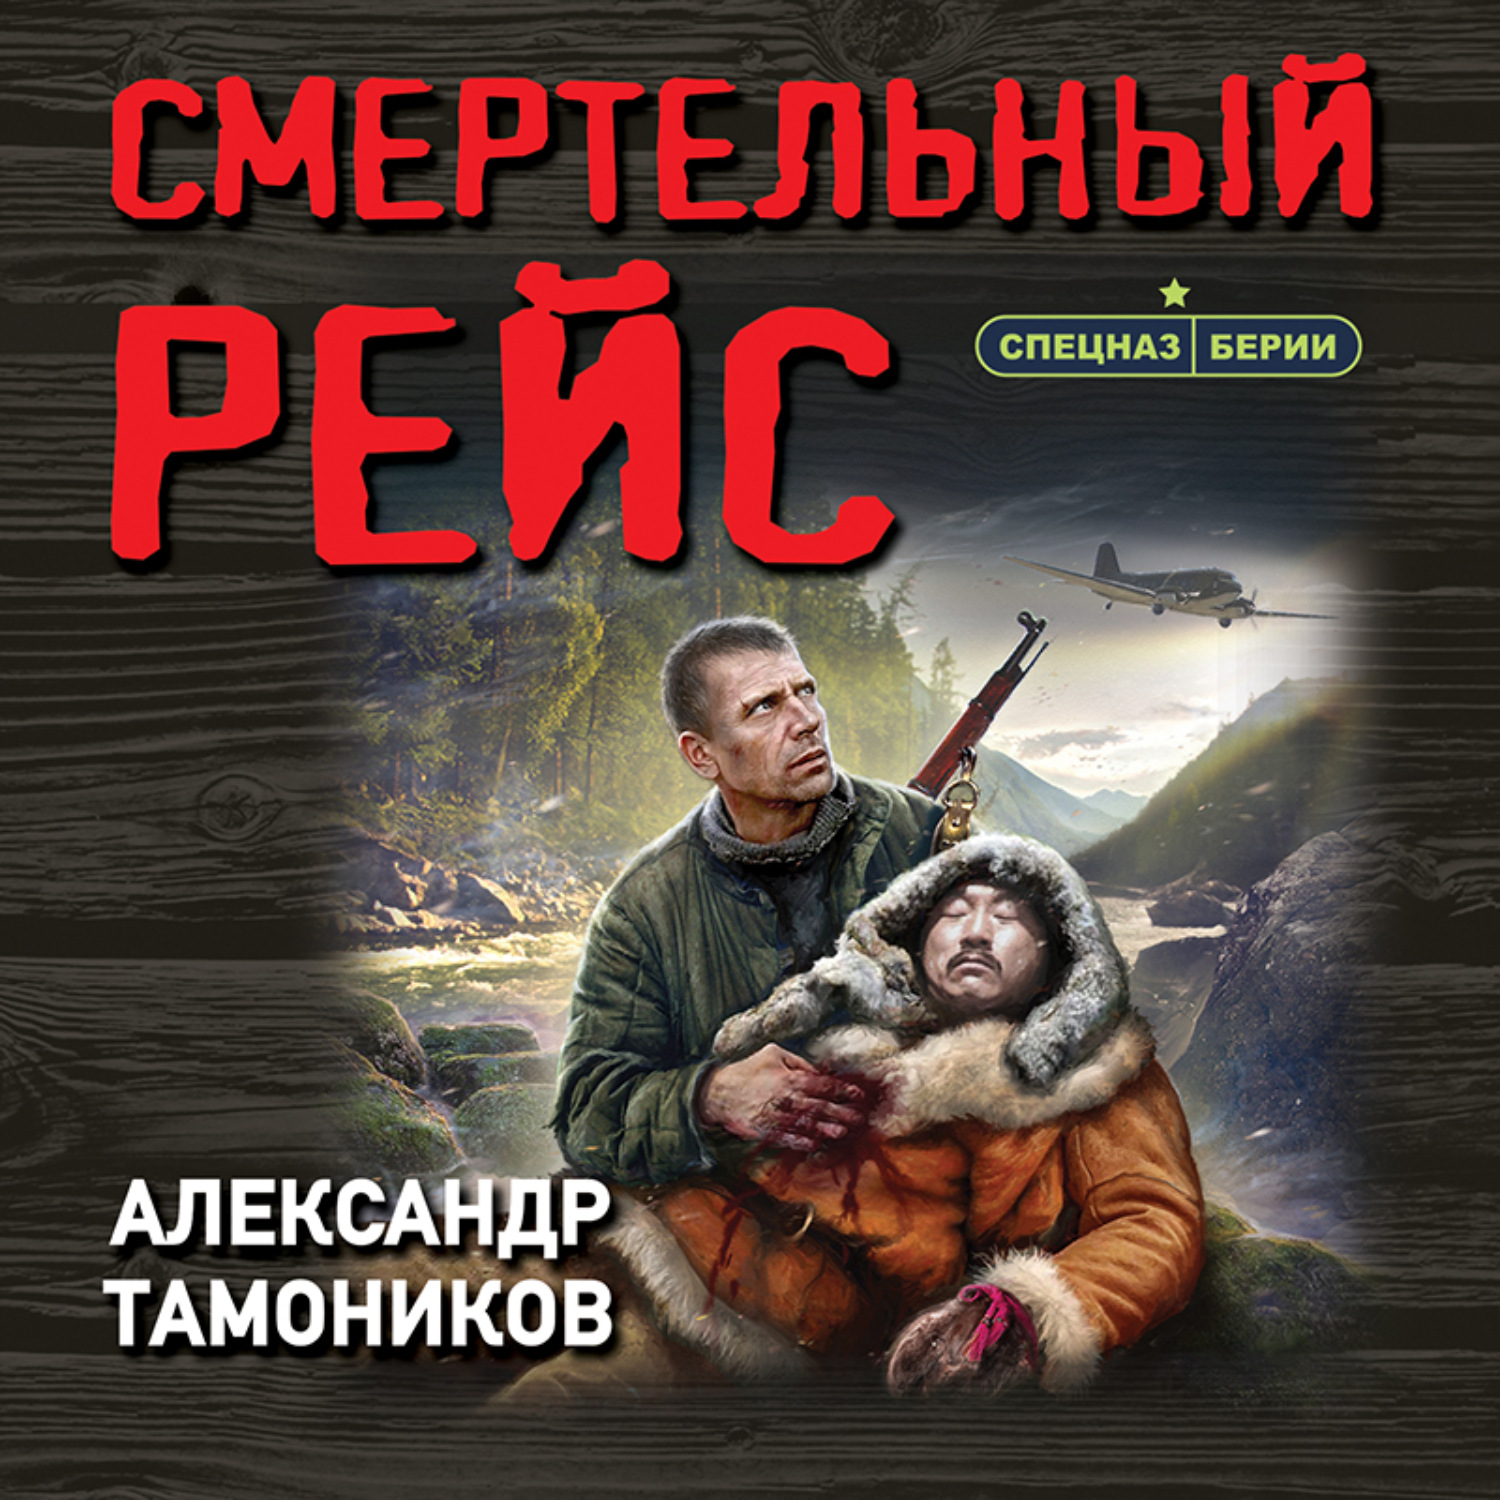 Аудиокнига спецназовец попал в 1941. Тамоников заговор против Сталина.